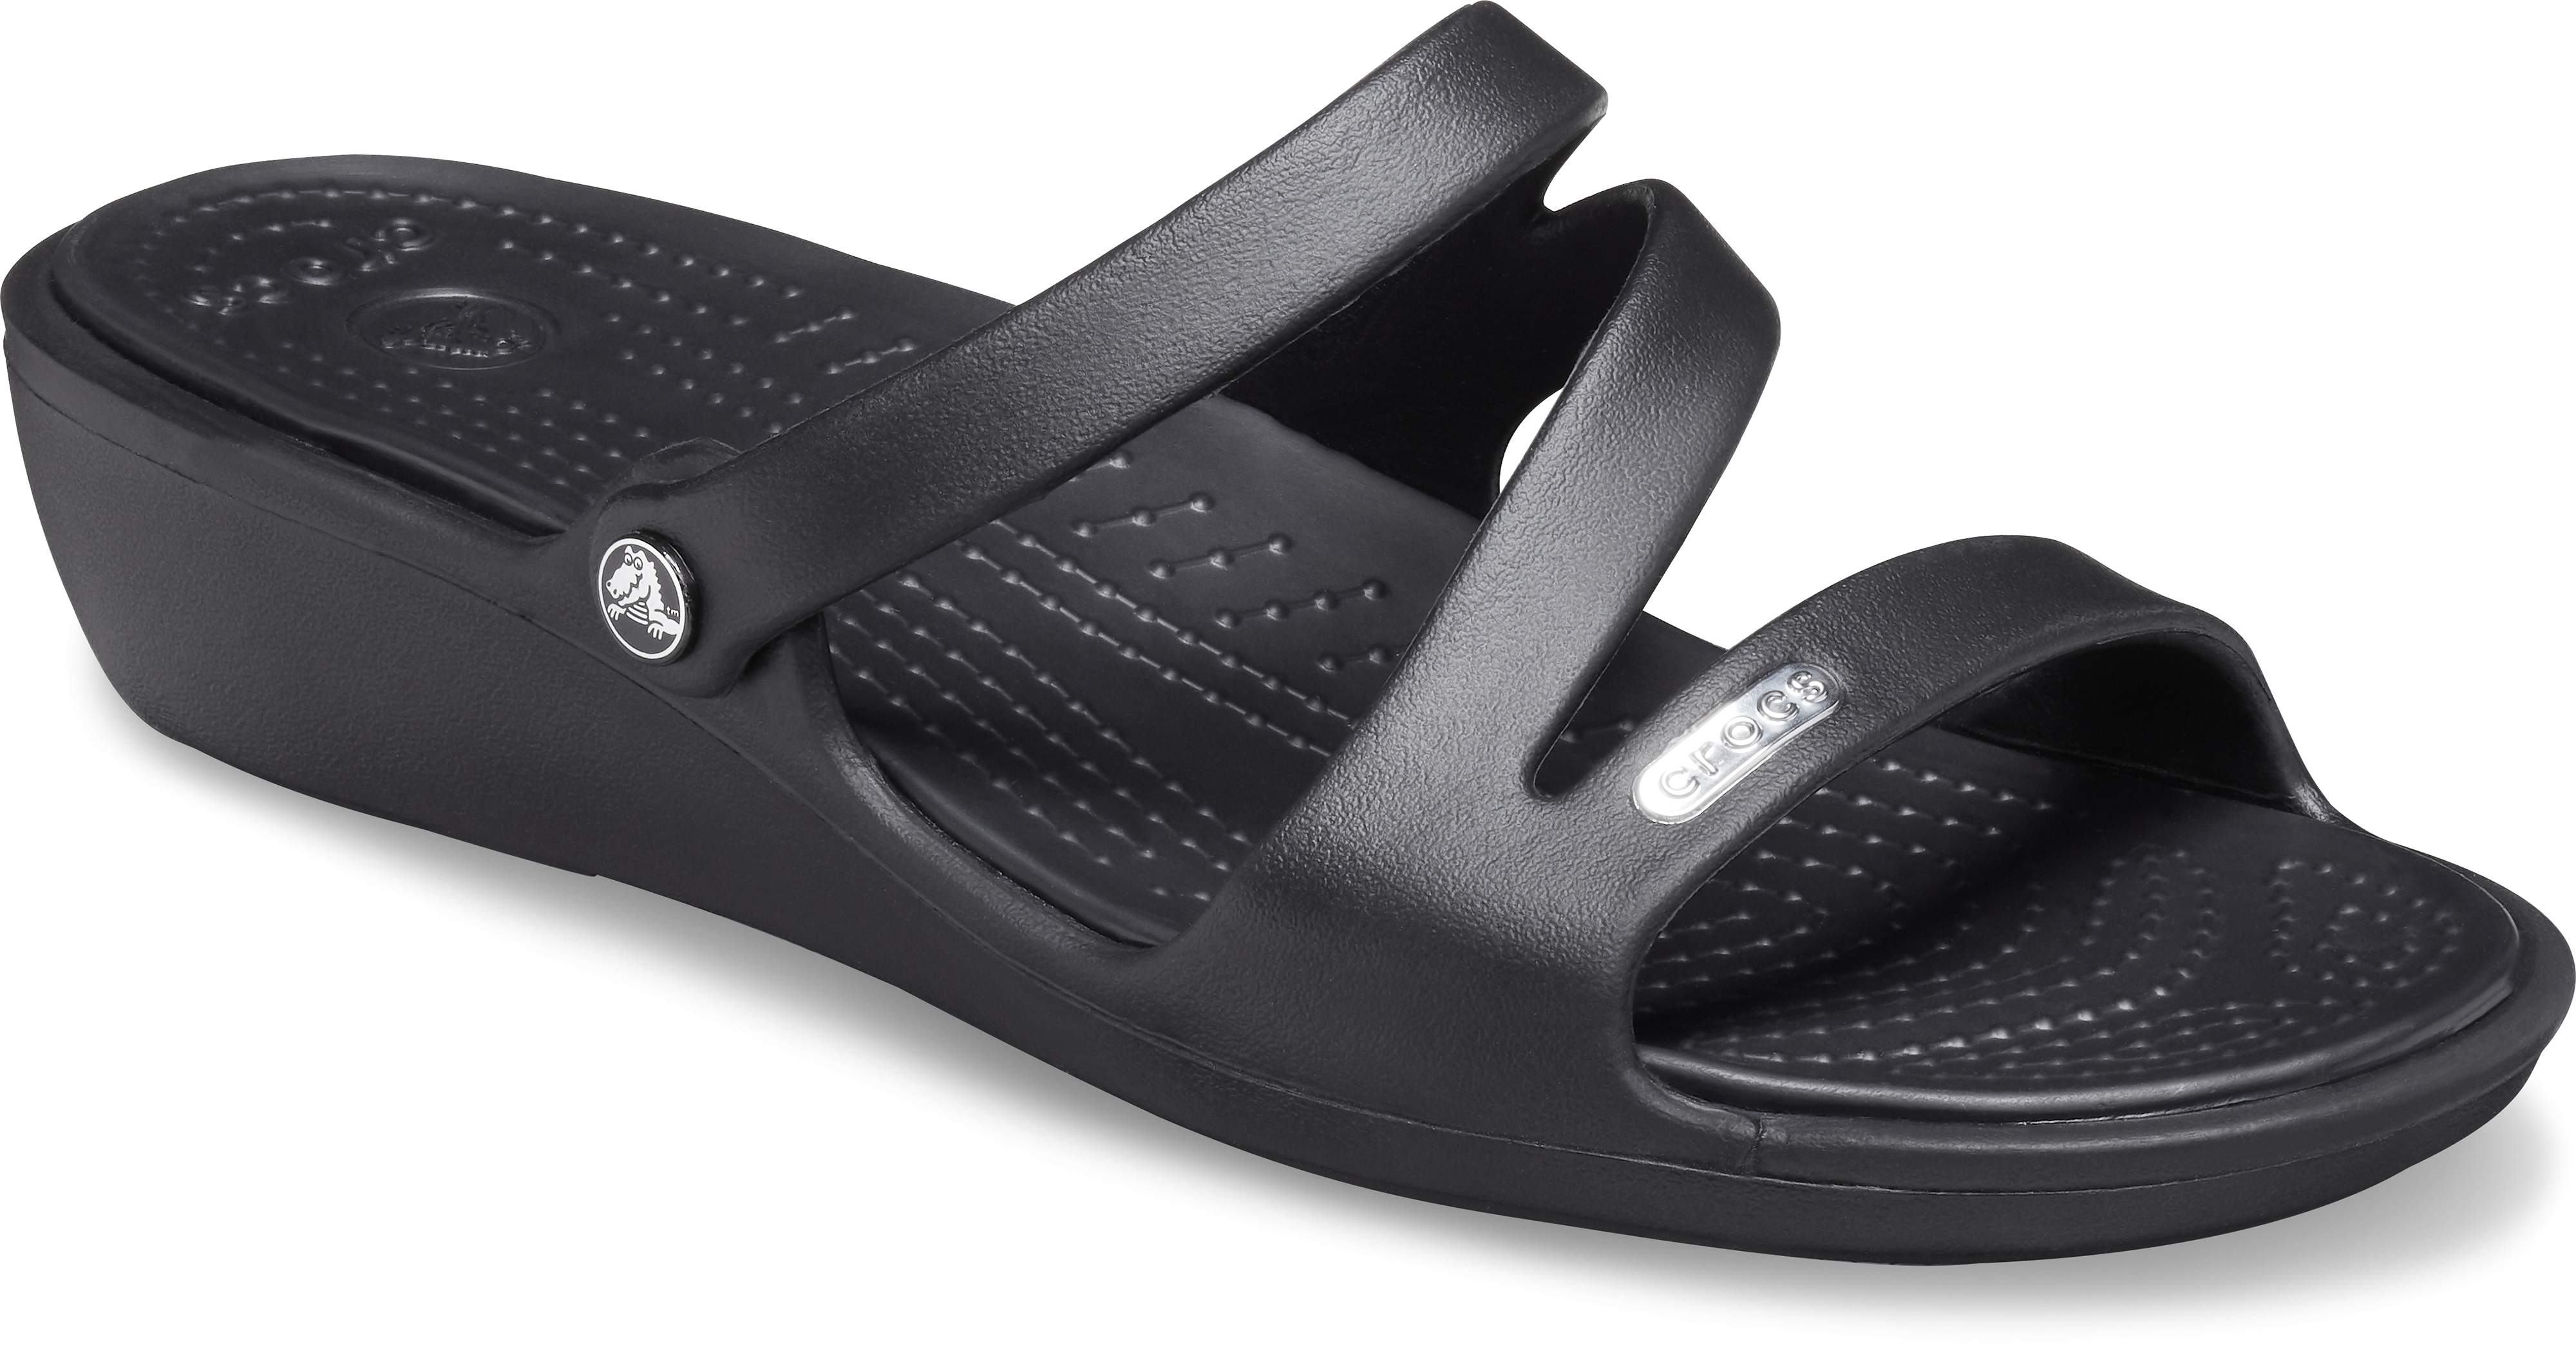 crocs female slippers